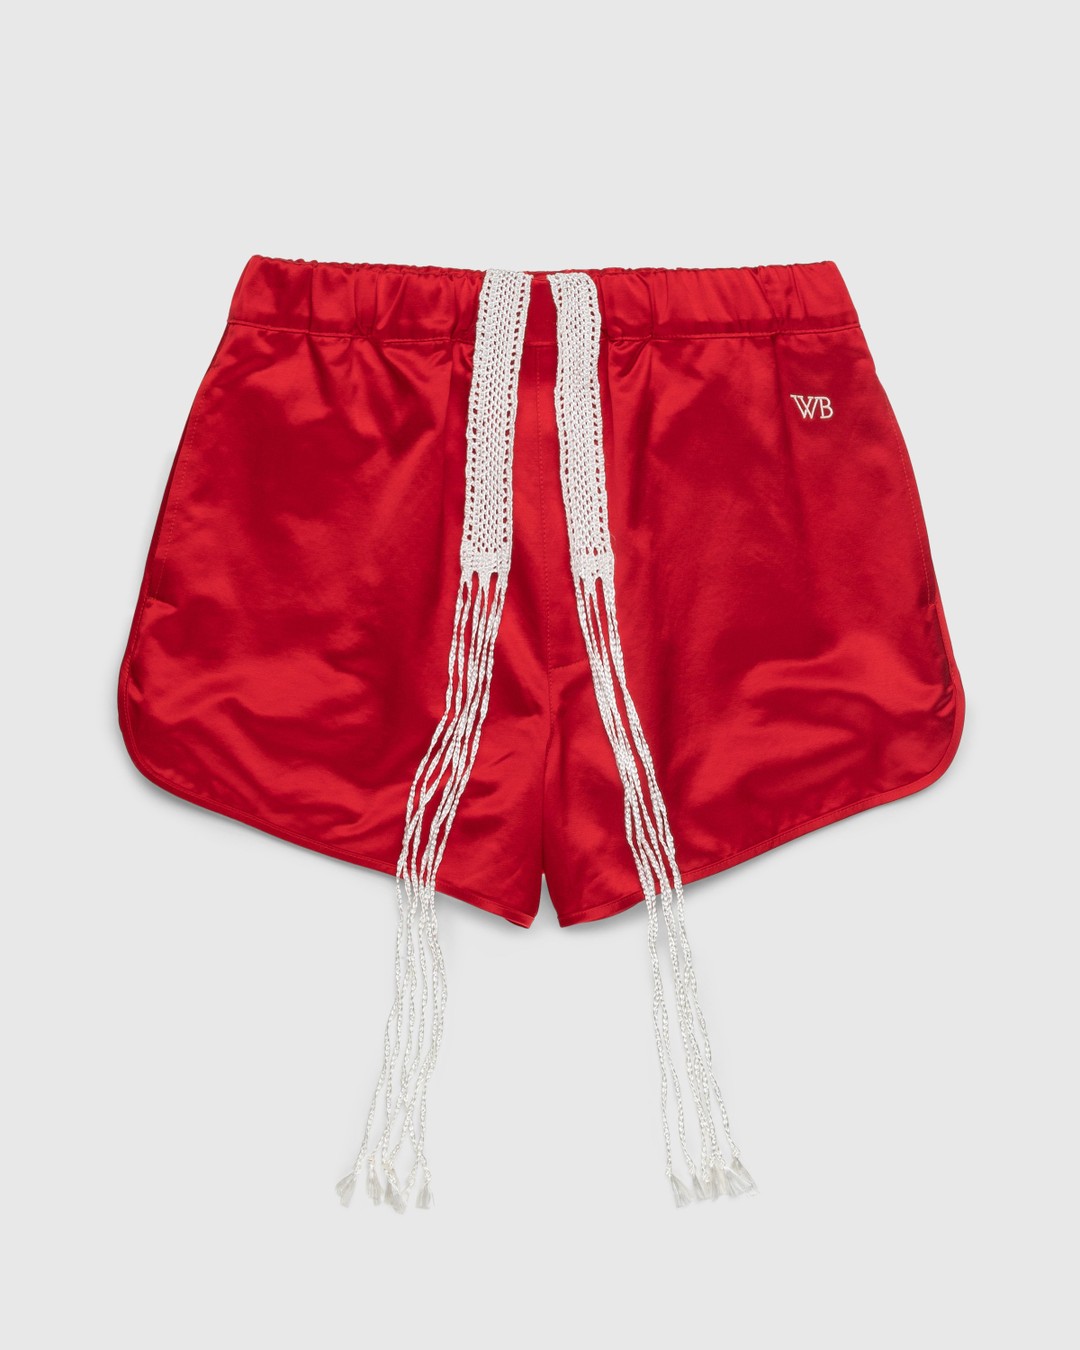 Wales Bonner – Cassette Shorts - Shorts - Red - Image 1